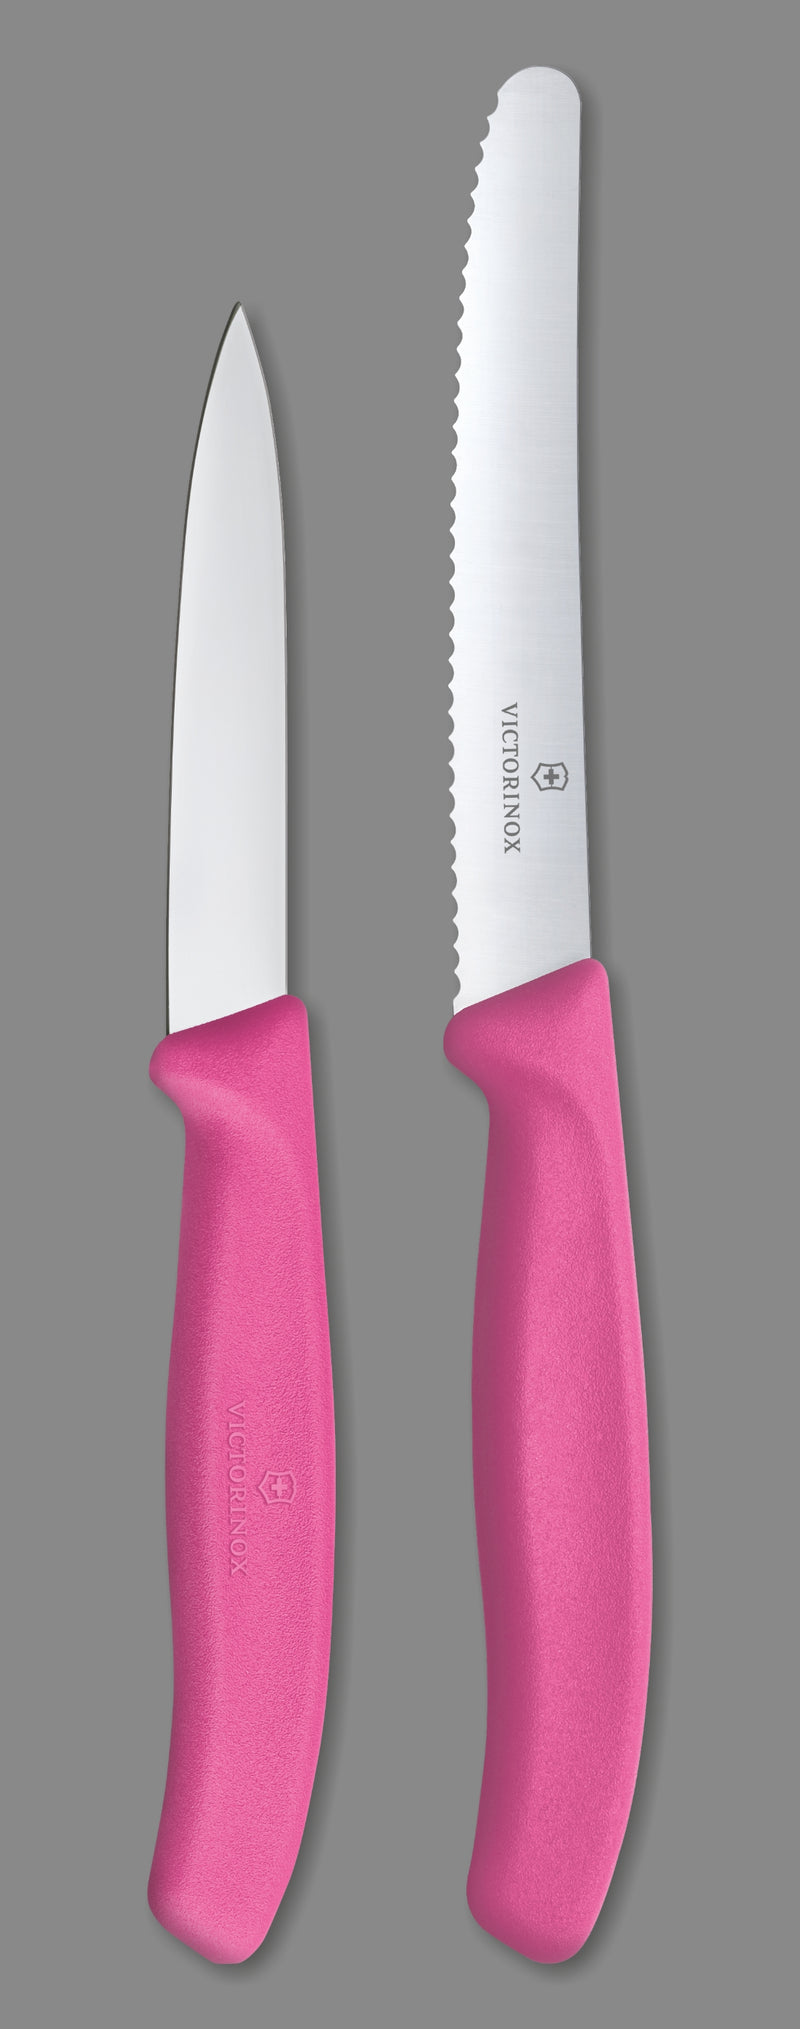 Victorinox Kitchen Knife, Set of 2, Sharp Stainless Steel Straight Edge and Wavy Edge, Pink, Swiss Made